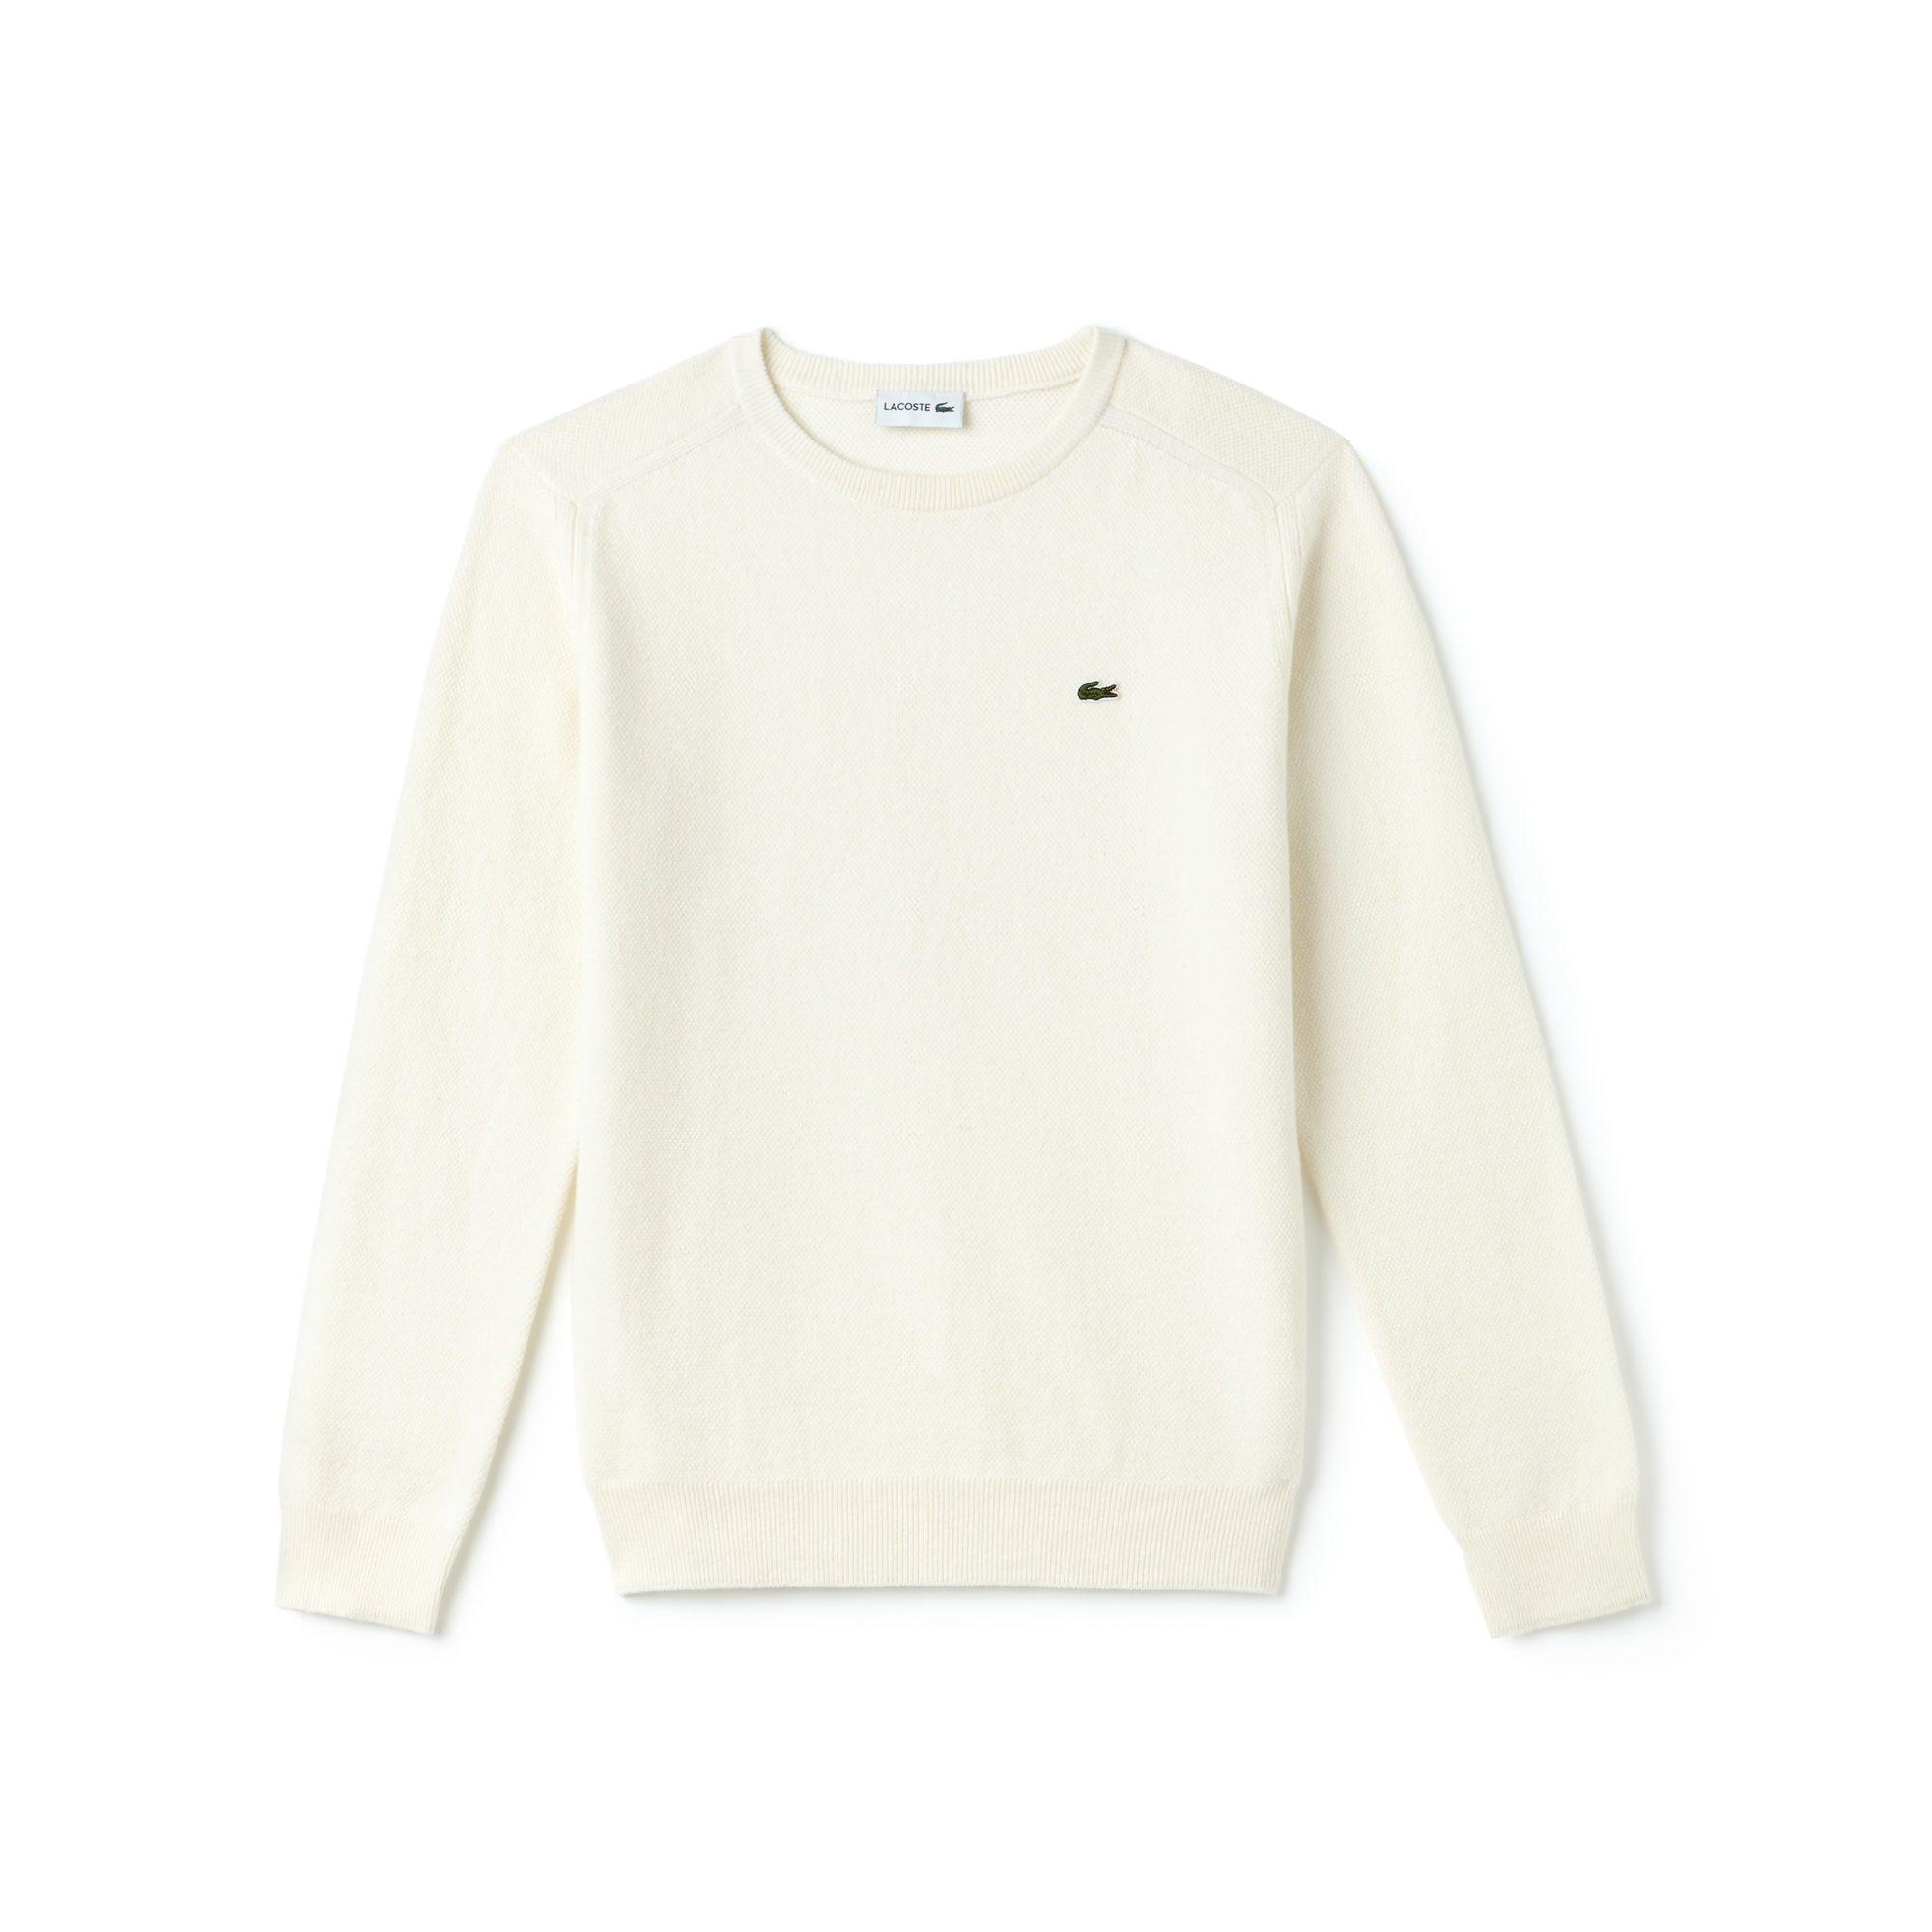 white lacoste sweater